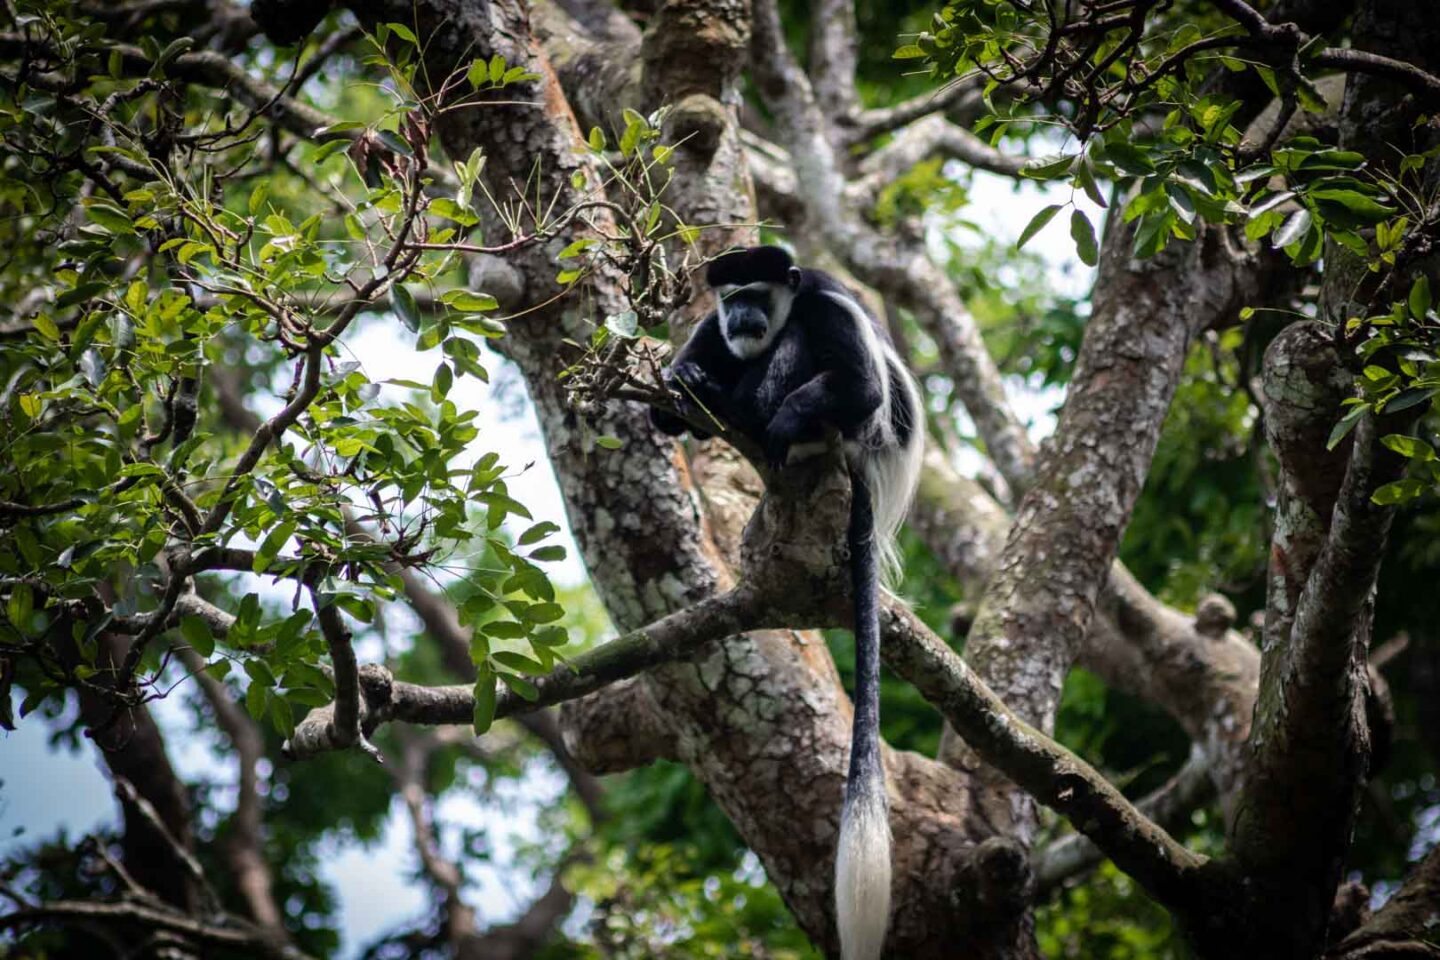 Primate Kingdom in Singapore Zoo